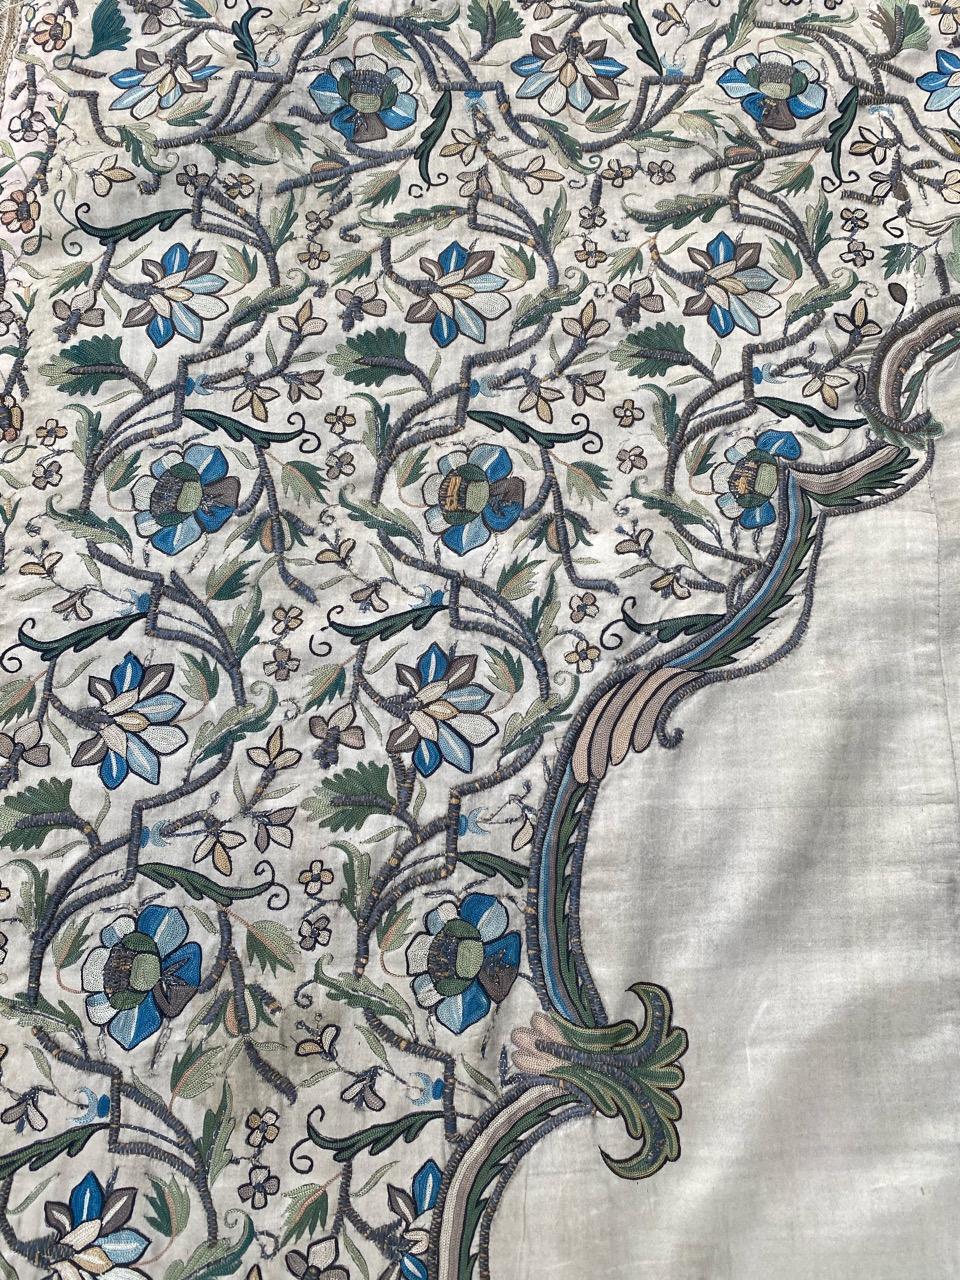 19th Century Bobyrug’s Wonderful Antique Turkish Ottoman Embroidery